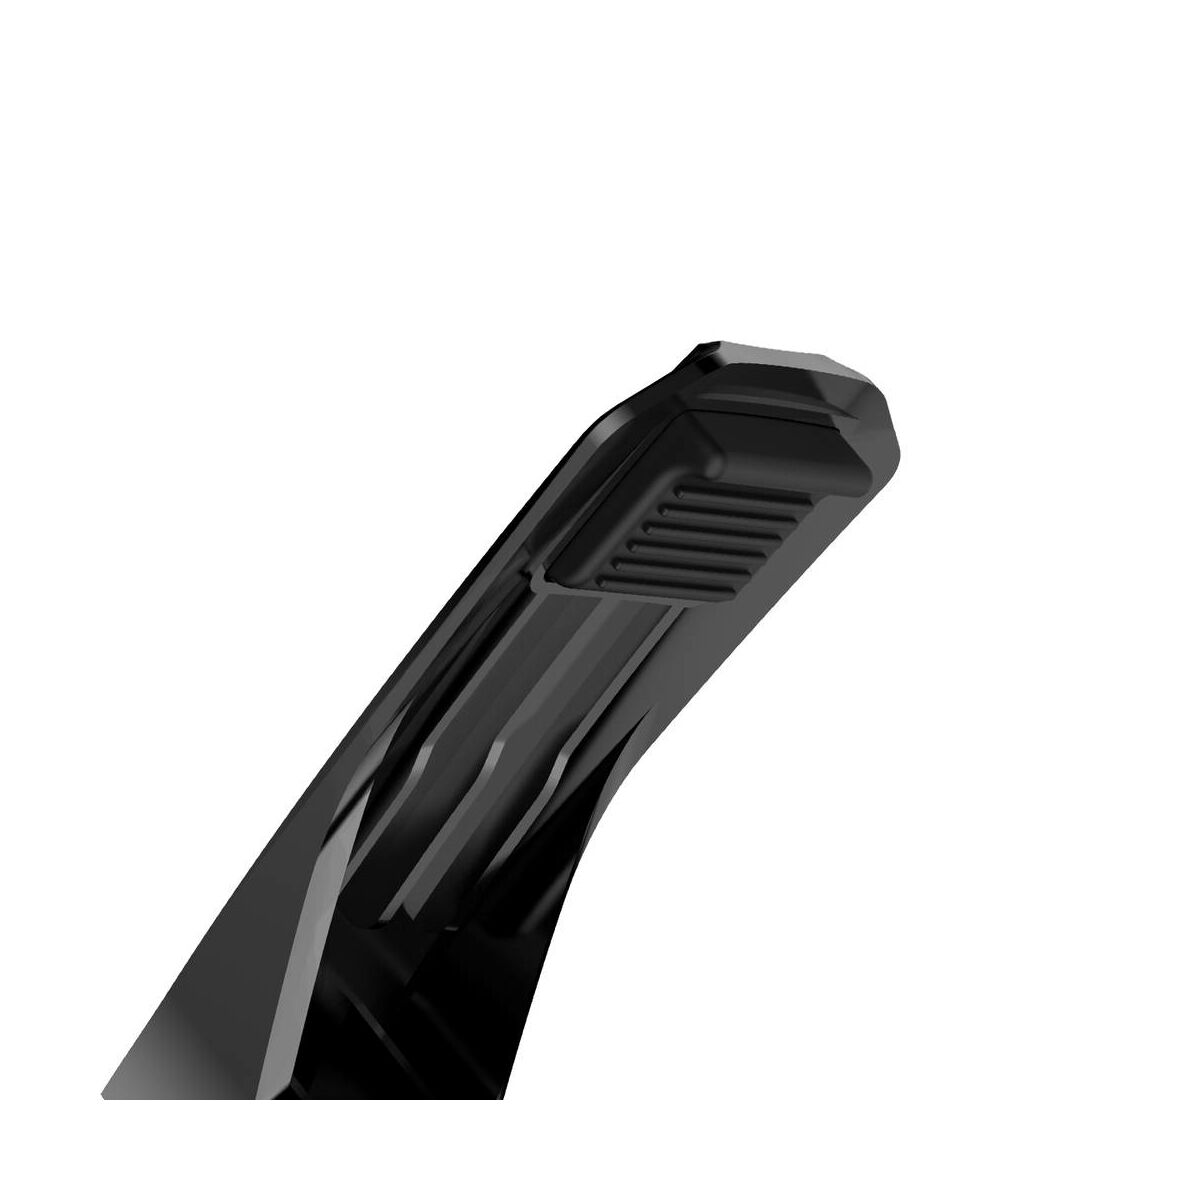 Kép 6/8 - Baseus autós telefontartó, Big series, fekete (SUDZ-01)